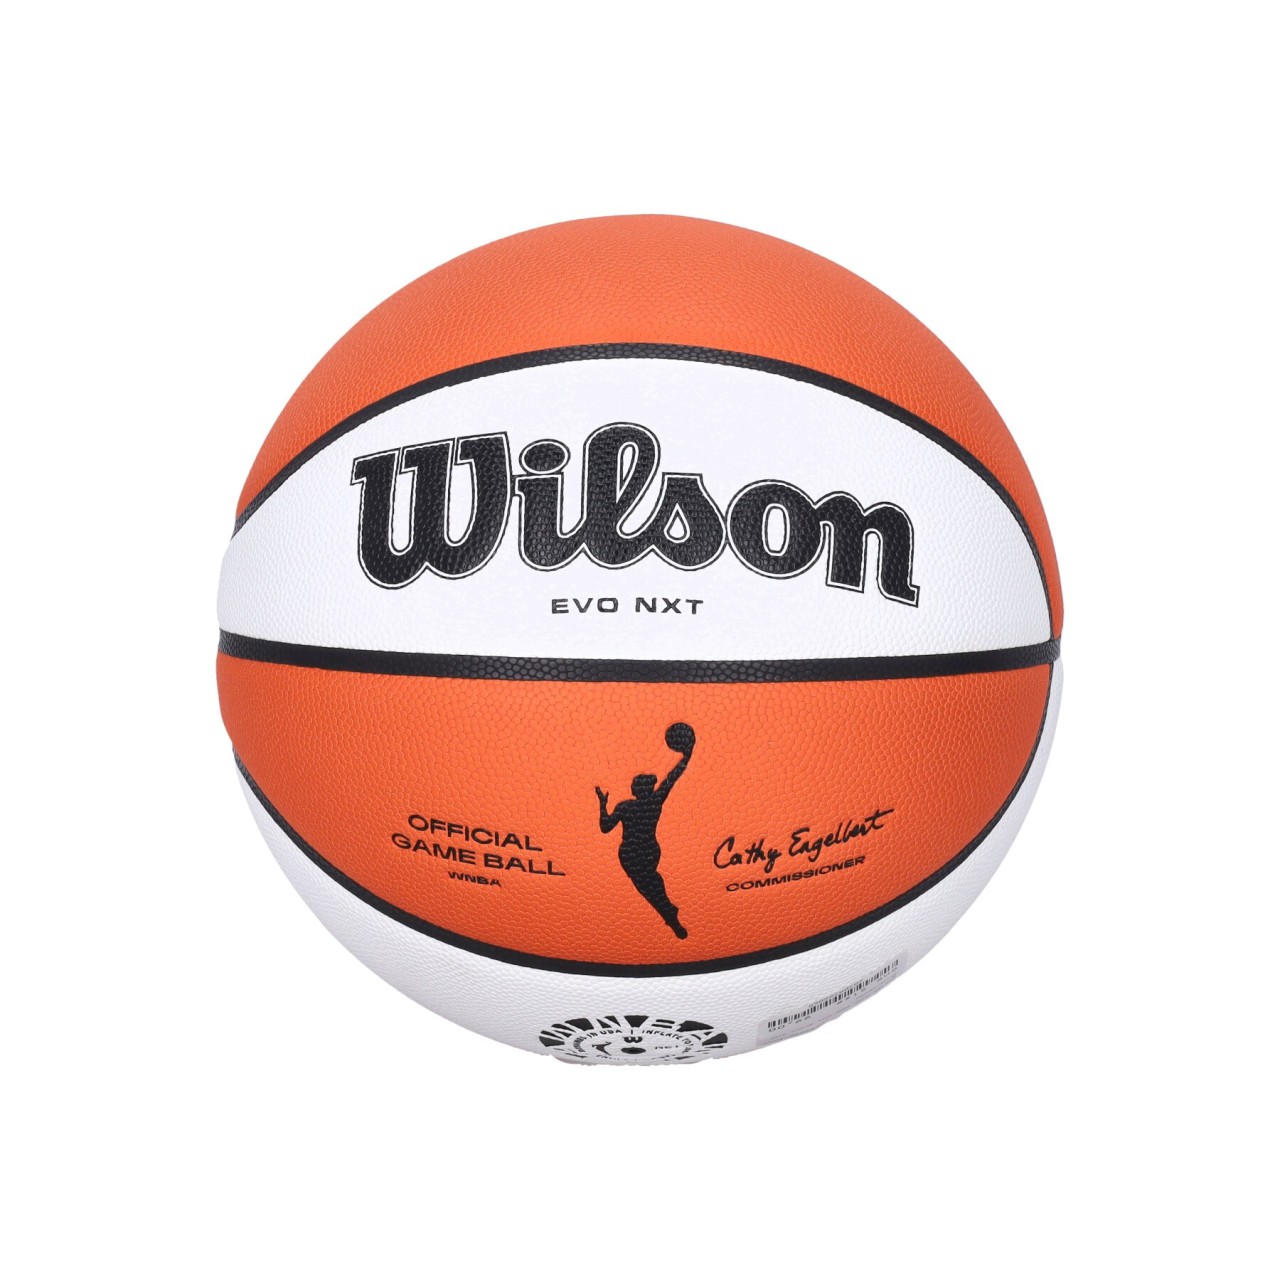 WILSON TEAM NBA OFFICIAL GAME BALL RETAIL SIZE 6 WTB5000XB06R